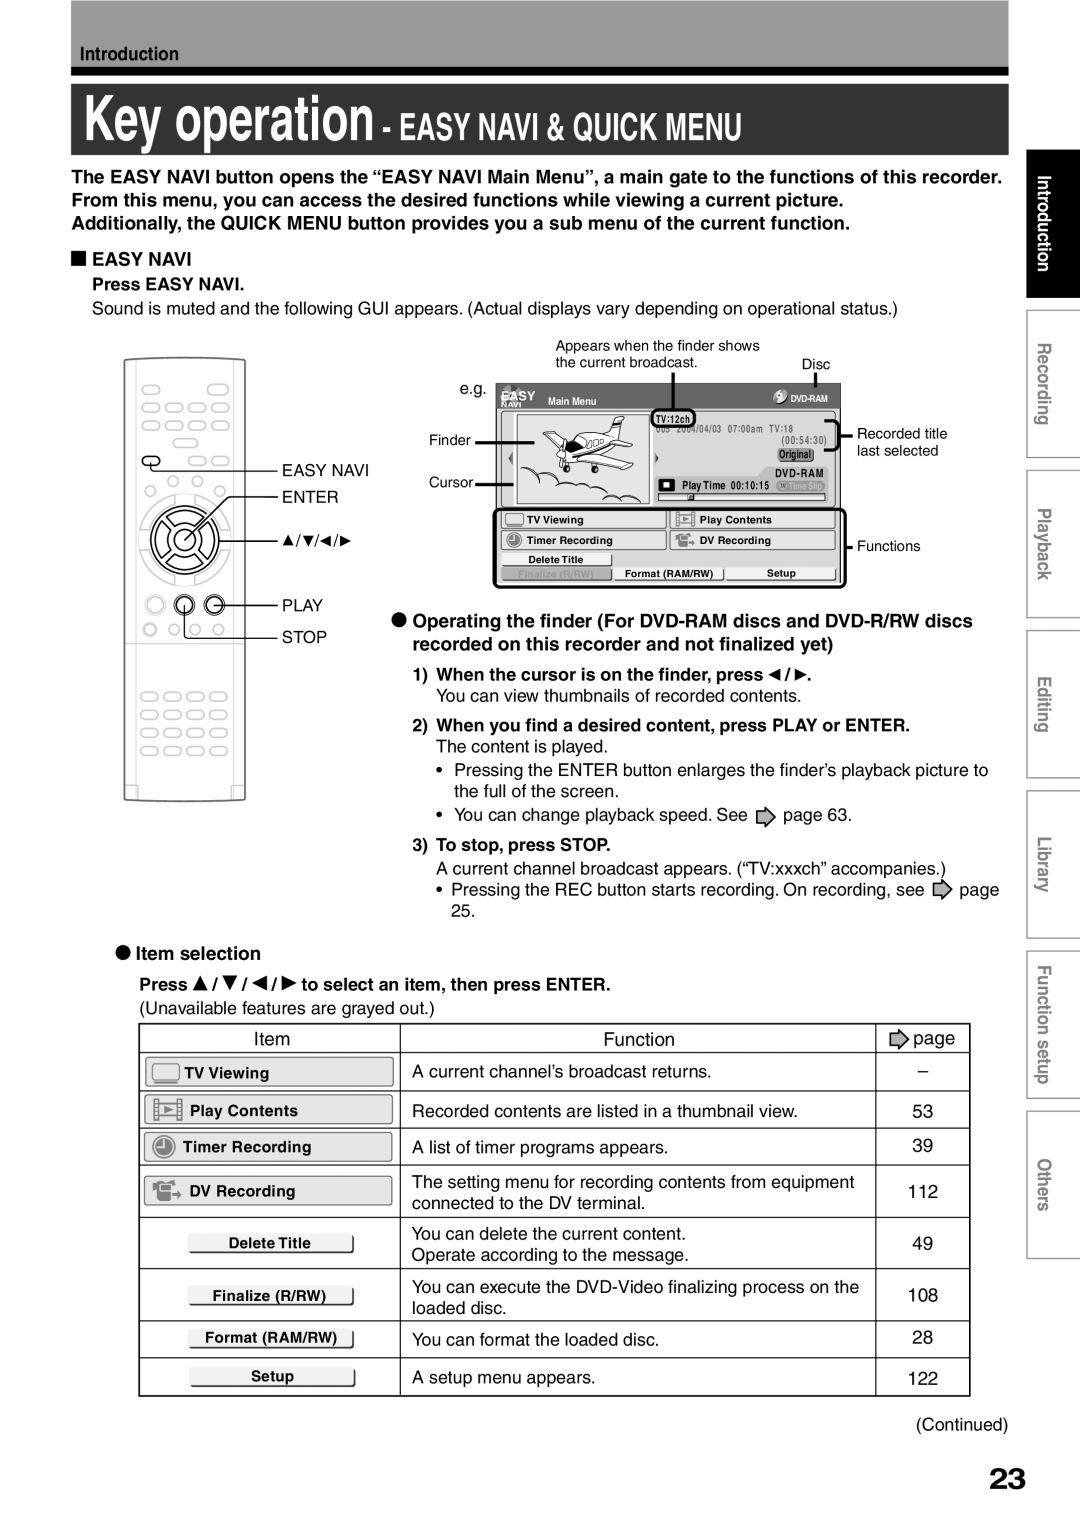 Toshiba D-KR2SU, D-R2SU Key operation - EASY NAVI & QUICK MENU, Easy Navi, Item selection, Introduction, Press EASY NAVI 